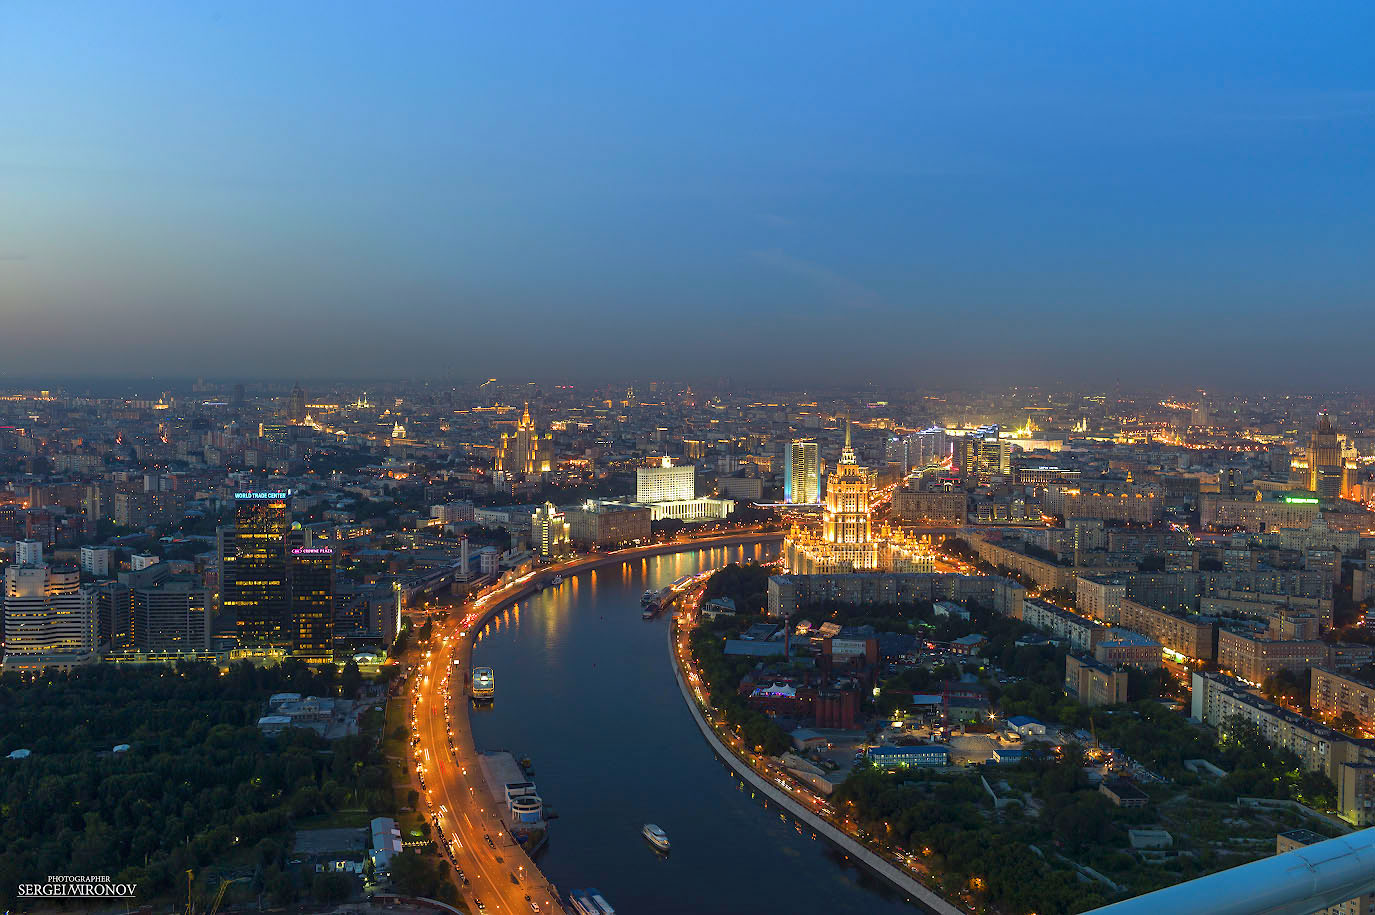 Панорамный. Москва фотопанорама. Ночная Москва панорама. Панорама вечерней Москвы. Панорамные снимки Москвы.